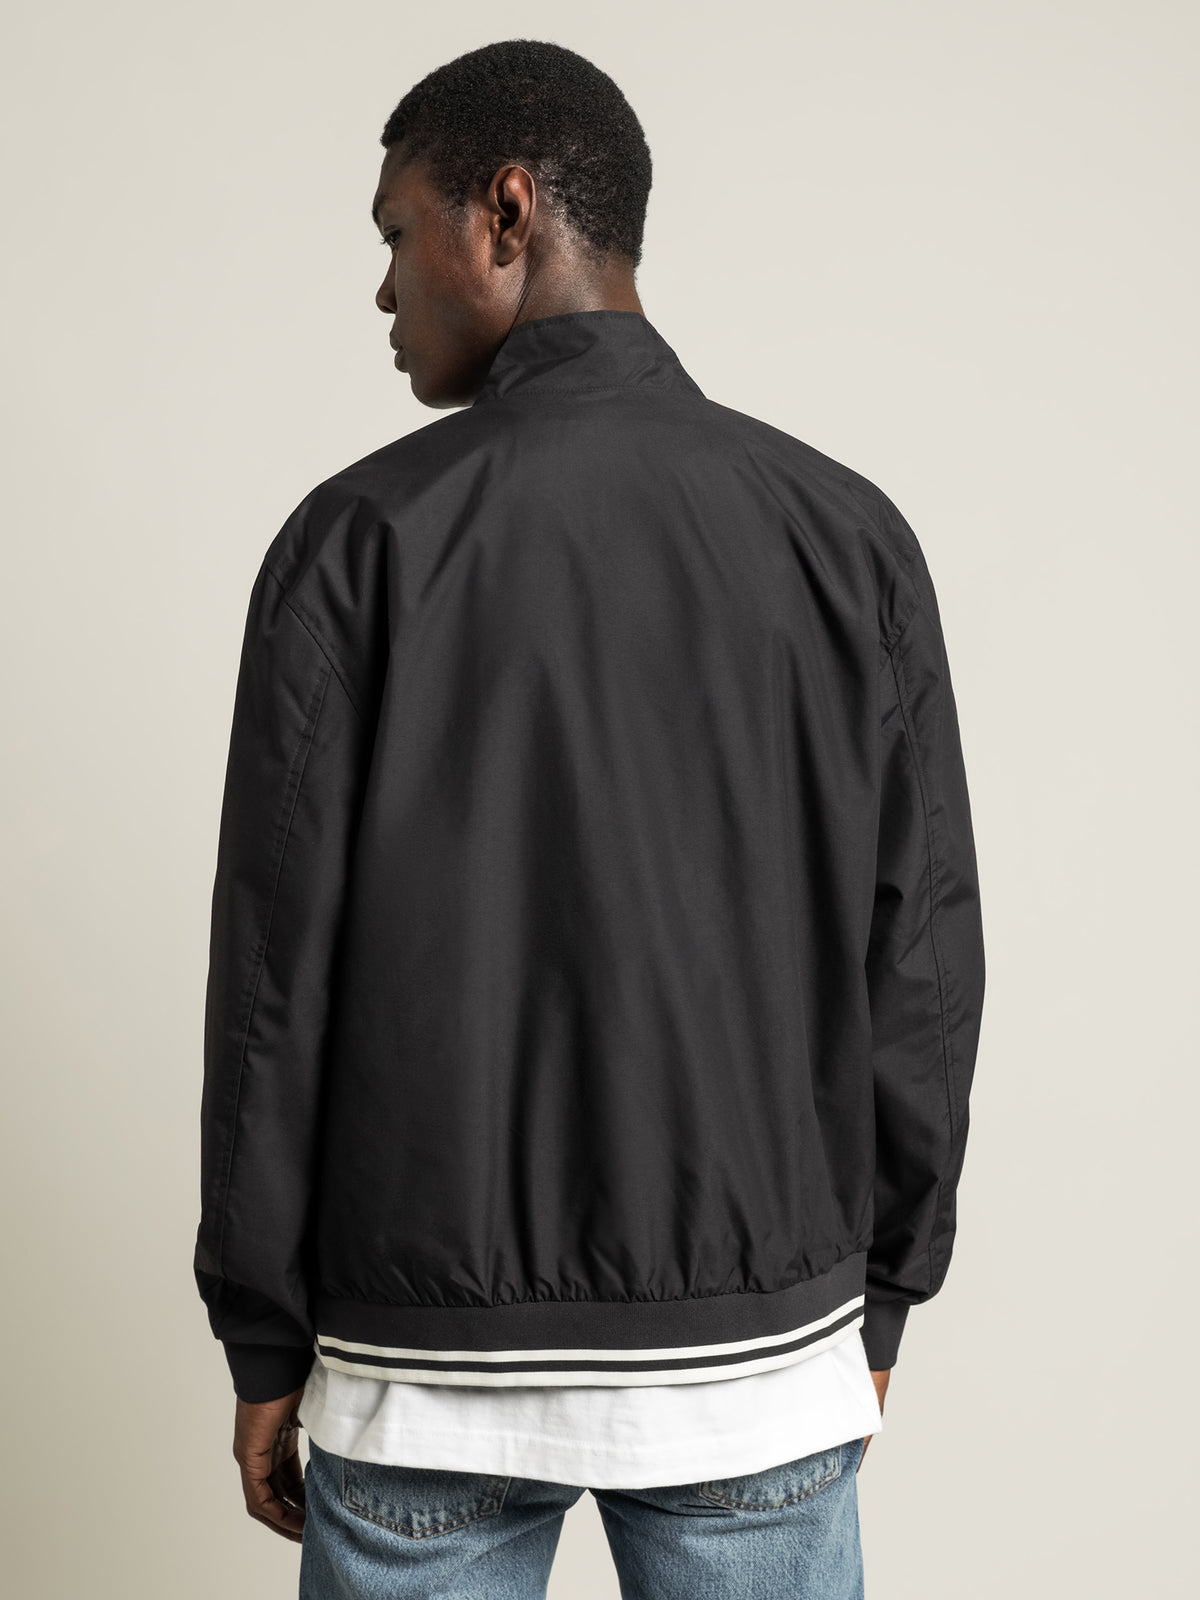 Brentham Sports Jacket in Black